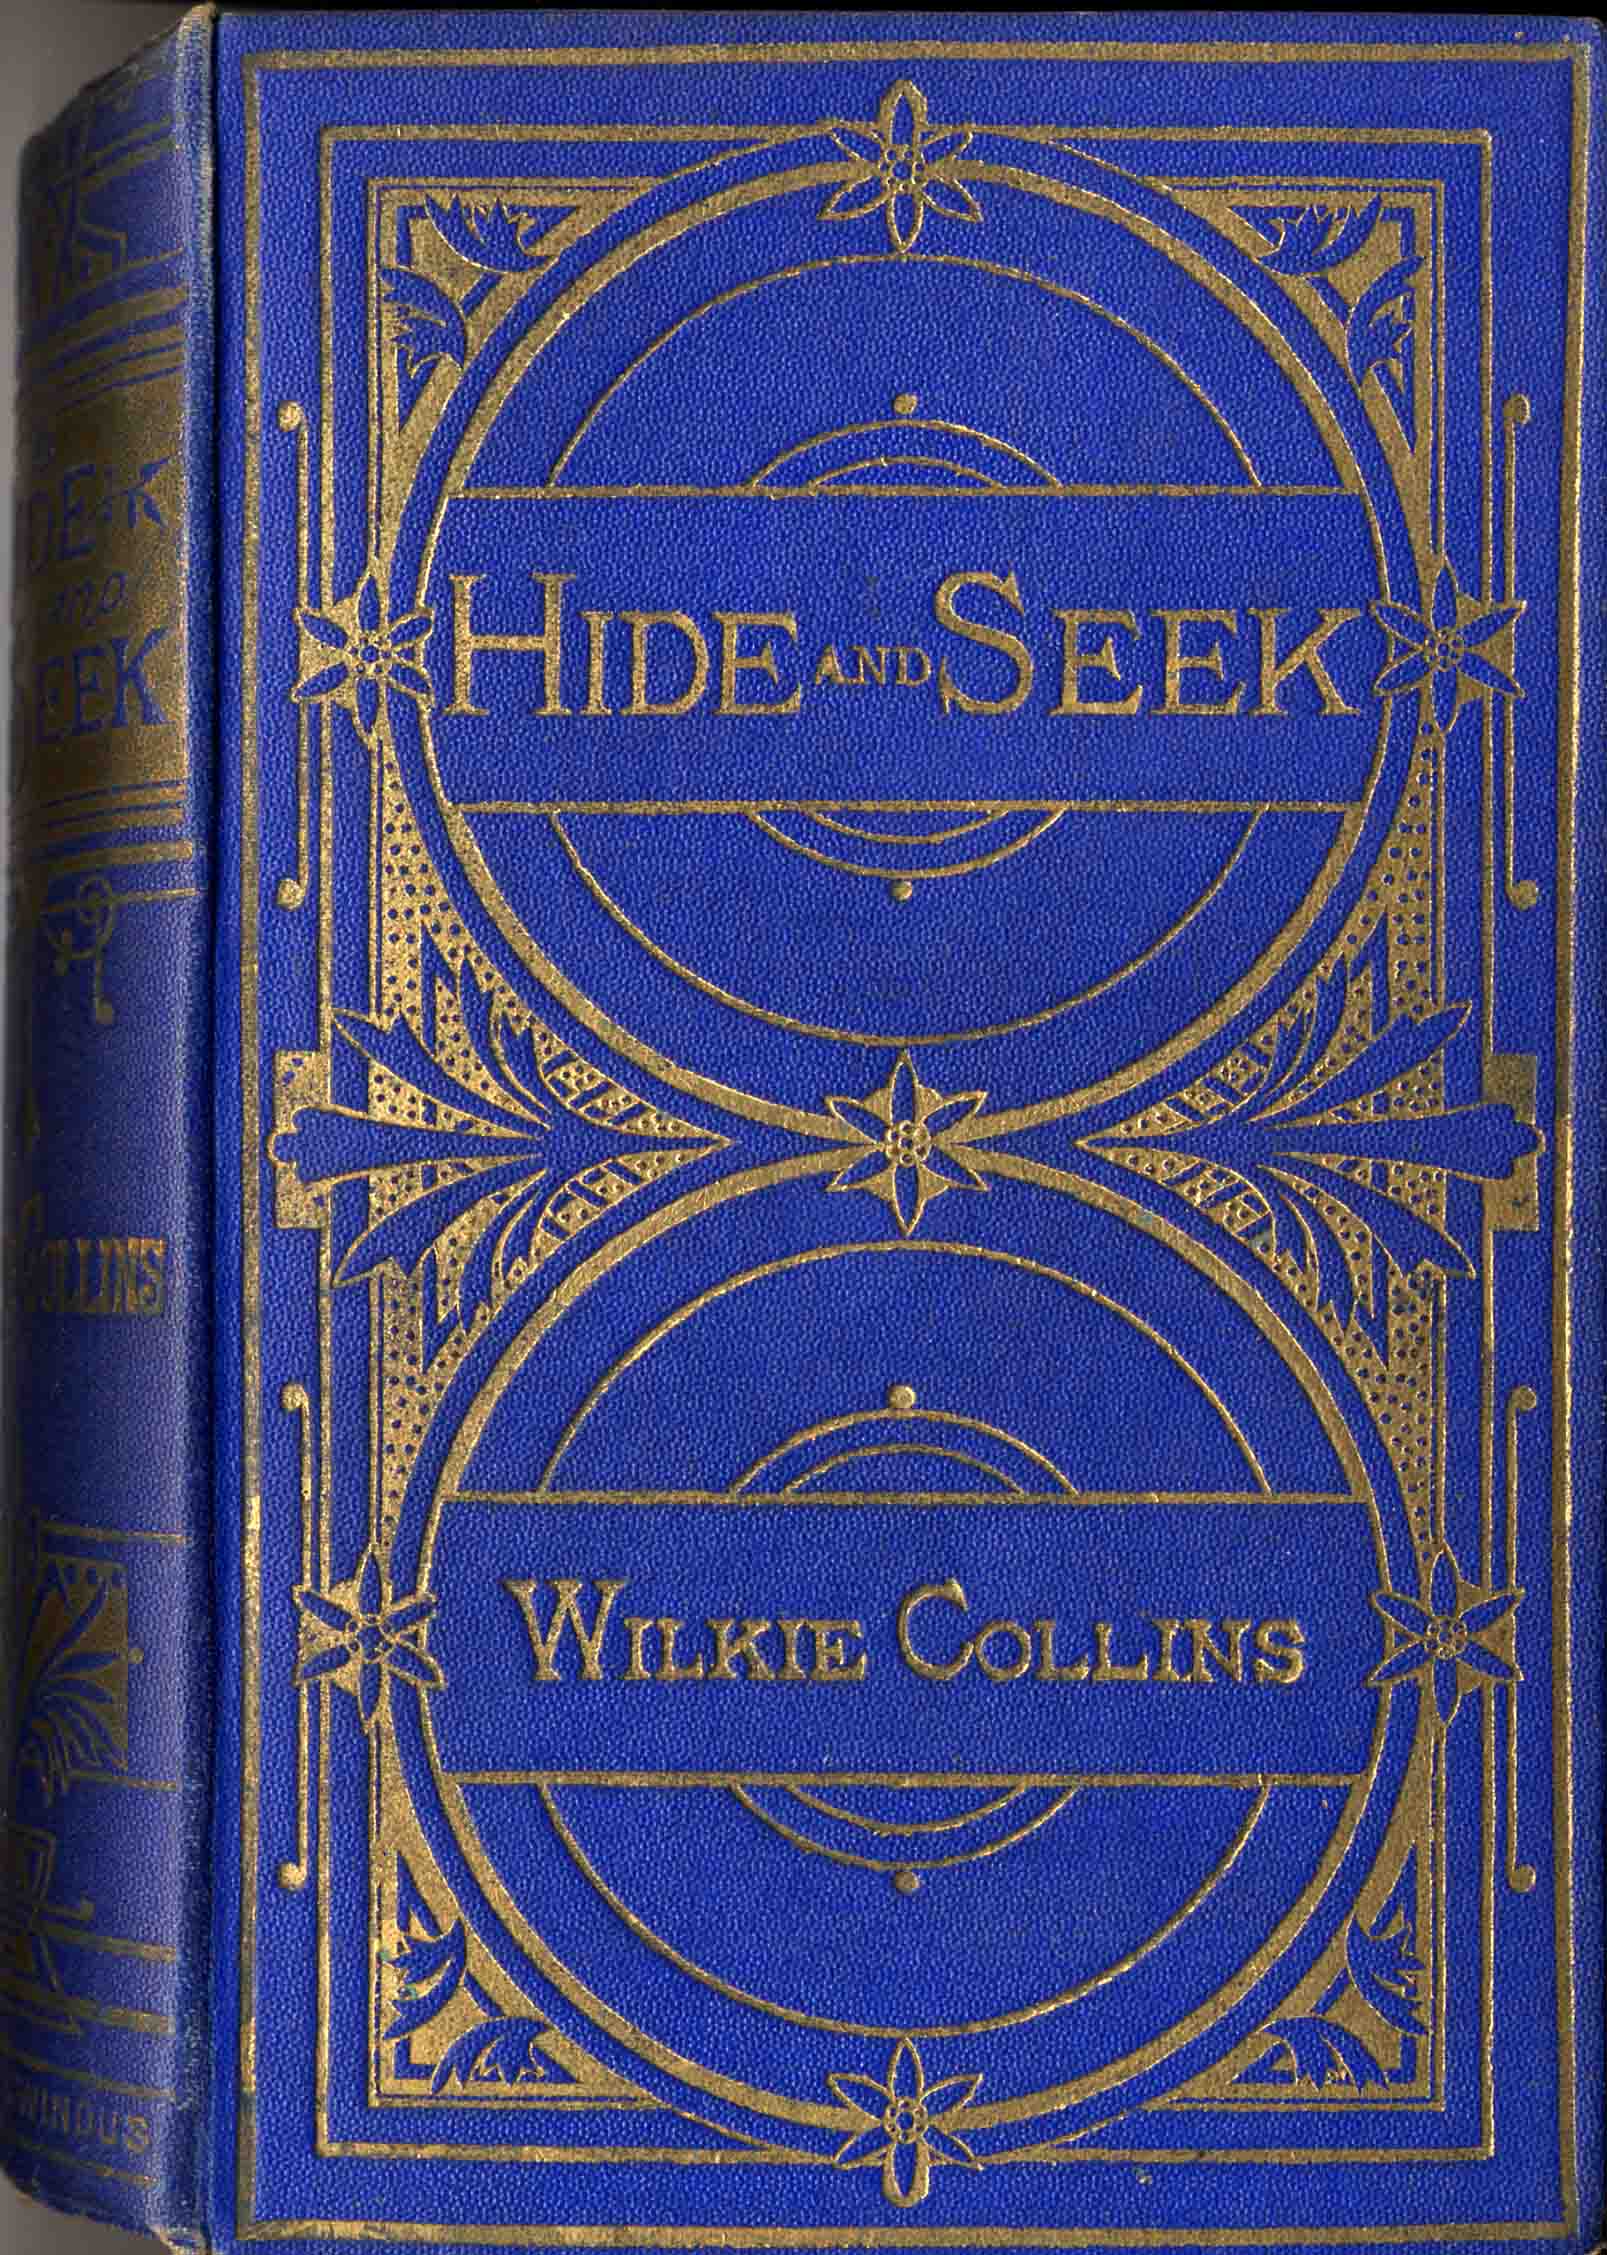 Hide and Seek - Chatto & Windus variant binding.